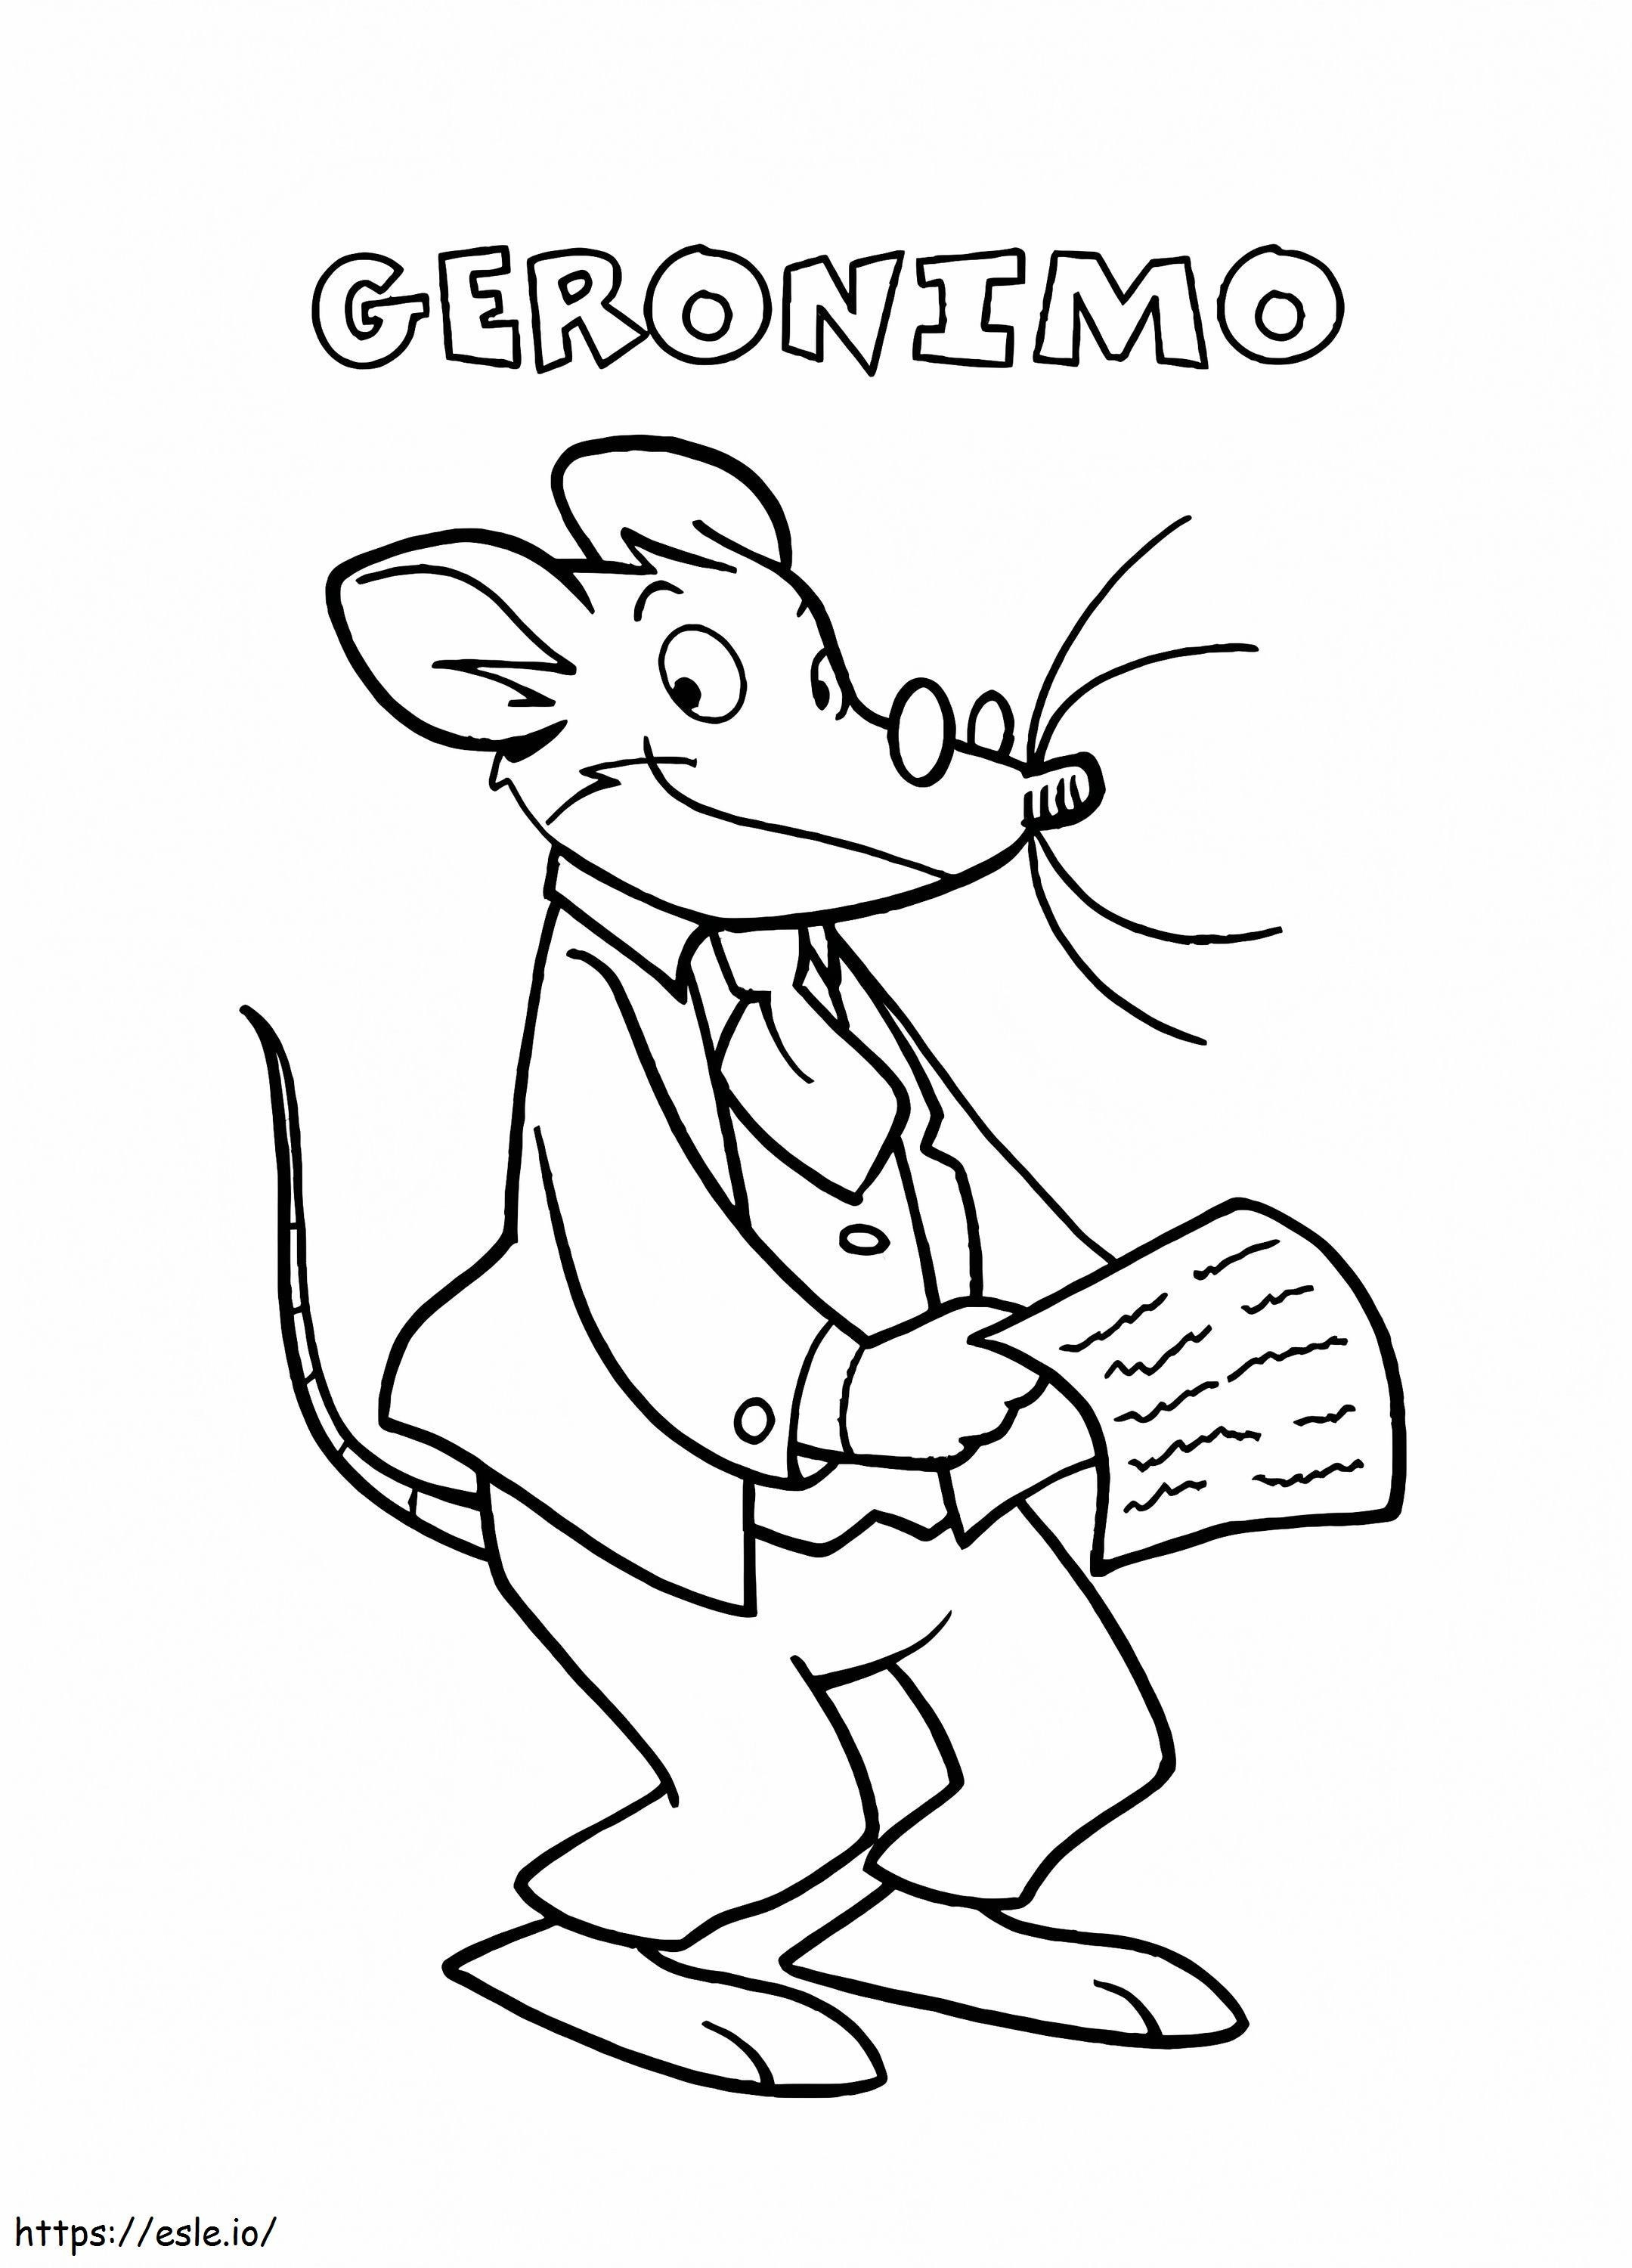 Free Geronimo Stilton coloring page